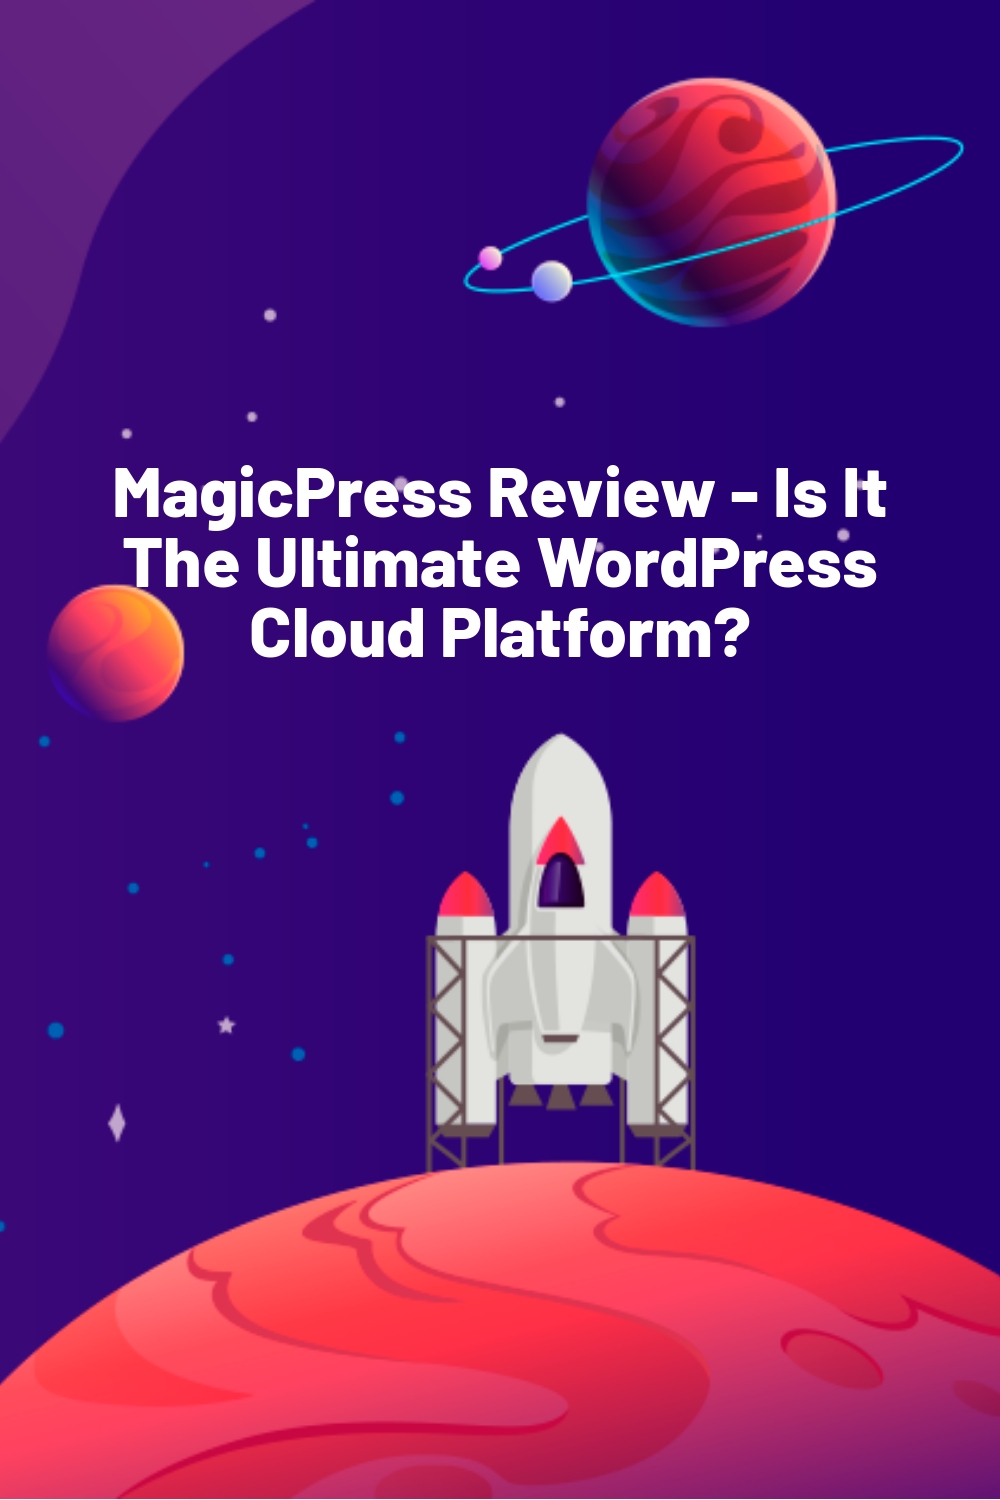 MagicPress Review – Is It The Ultimate WordPress Cloud Platform?